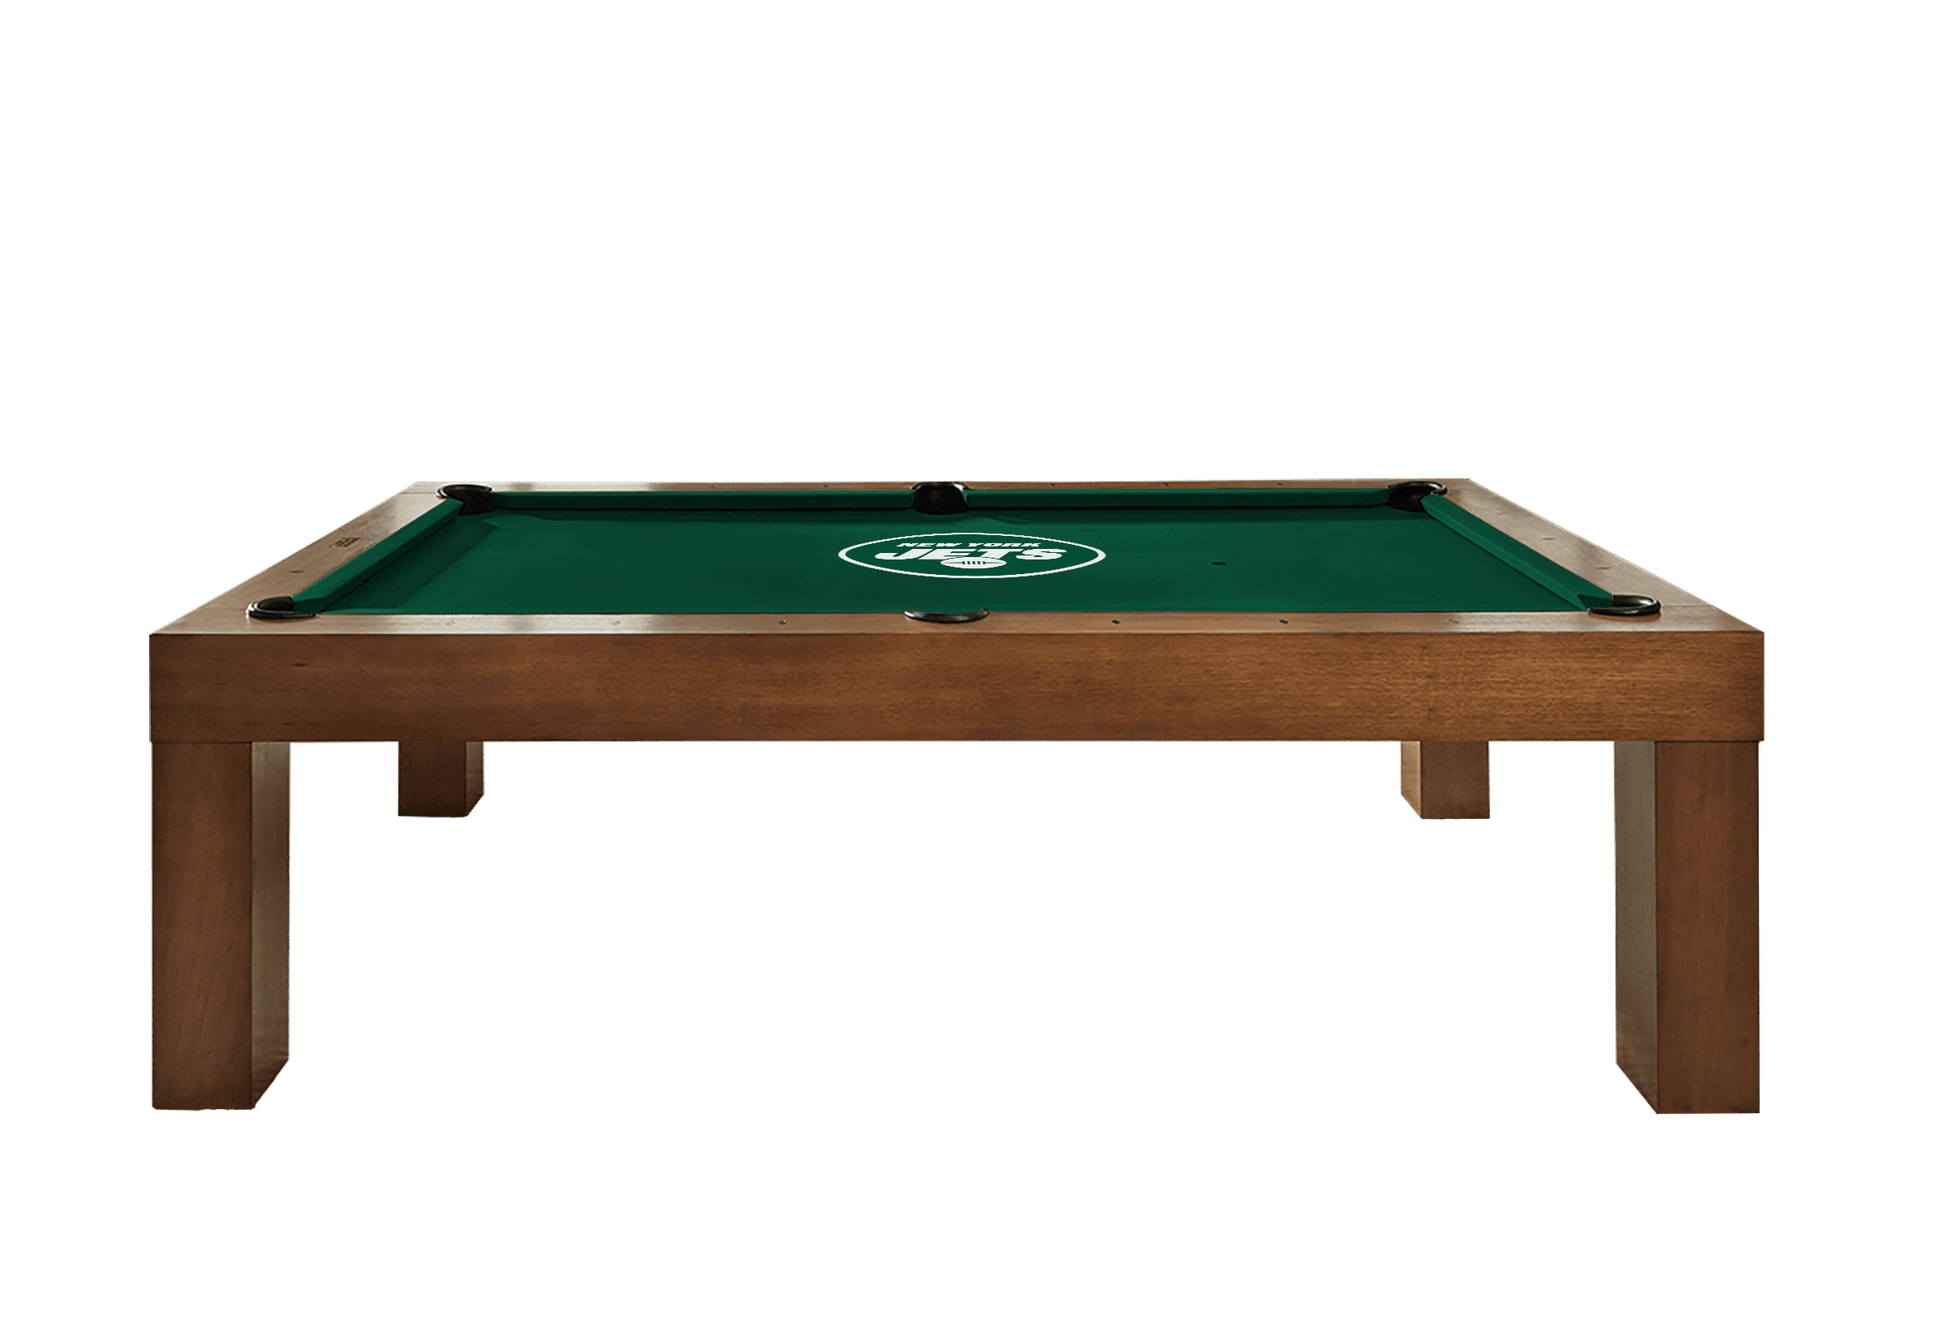 New York Jets Premium Pool Table Bundle - Walnut Pool Bundle Home Arcade Games   